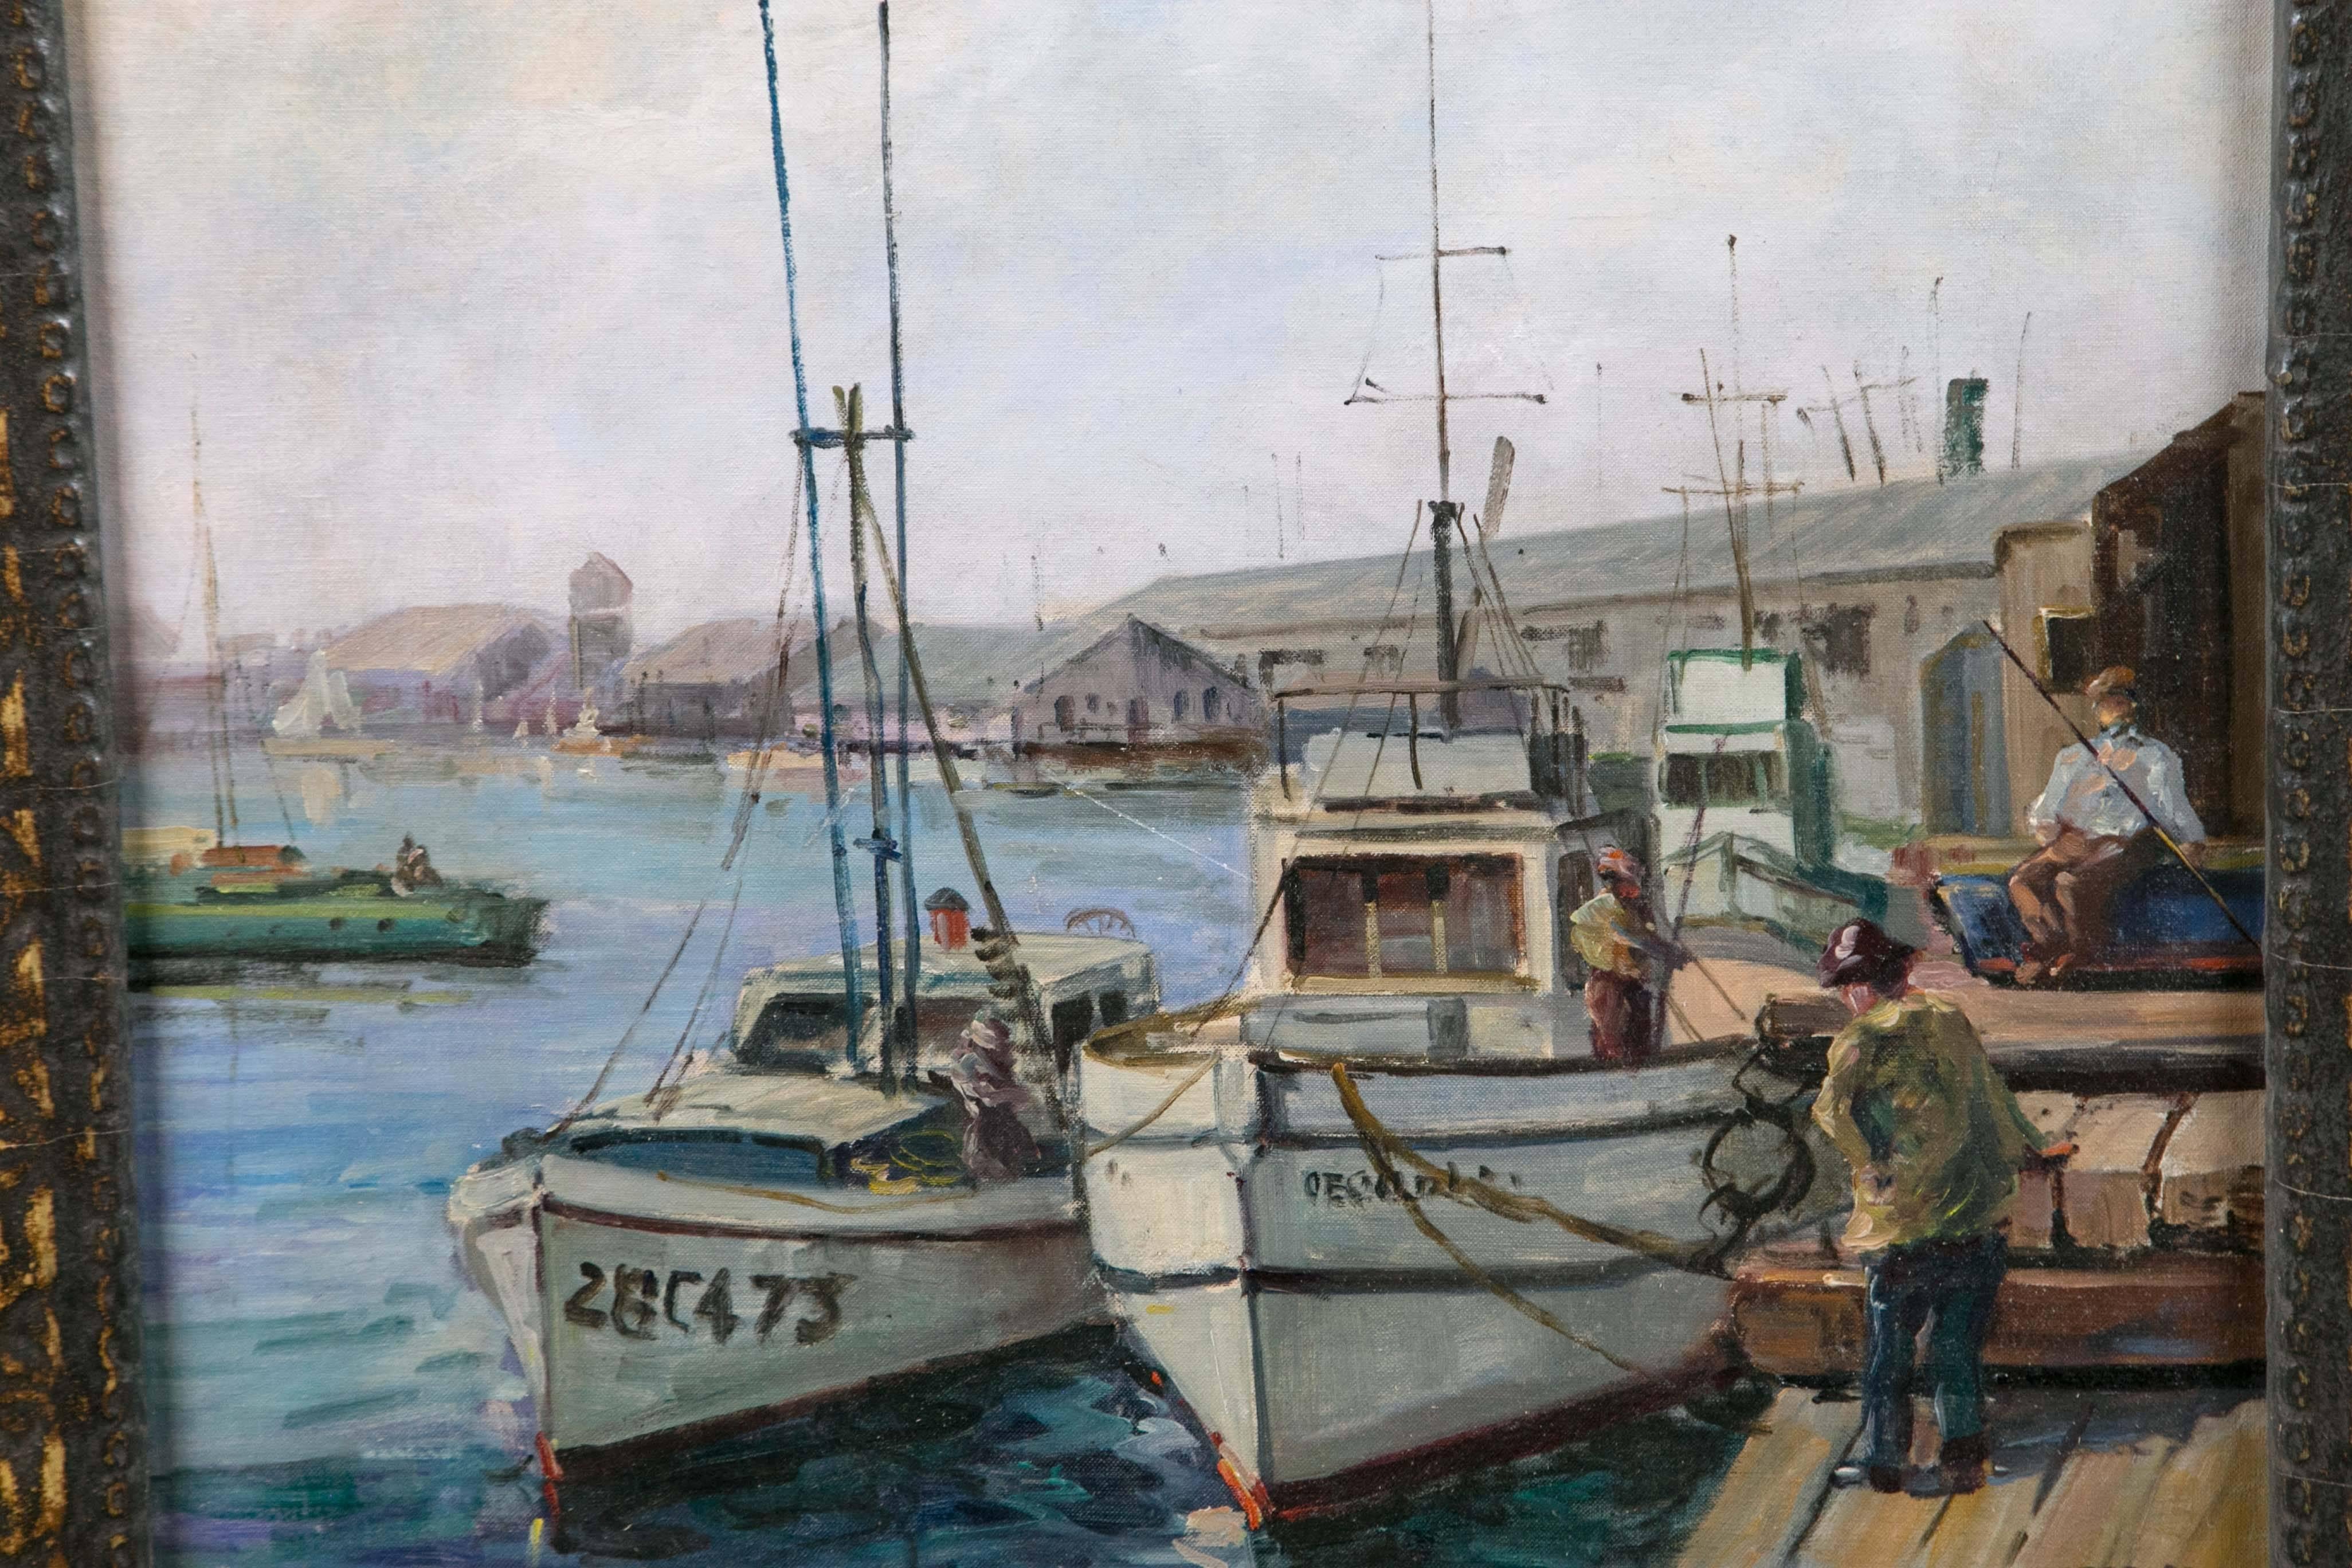 Charming harbor scene in custom frame.